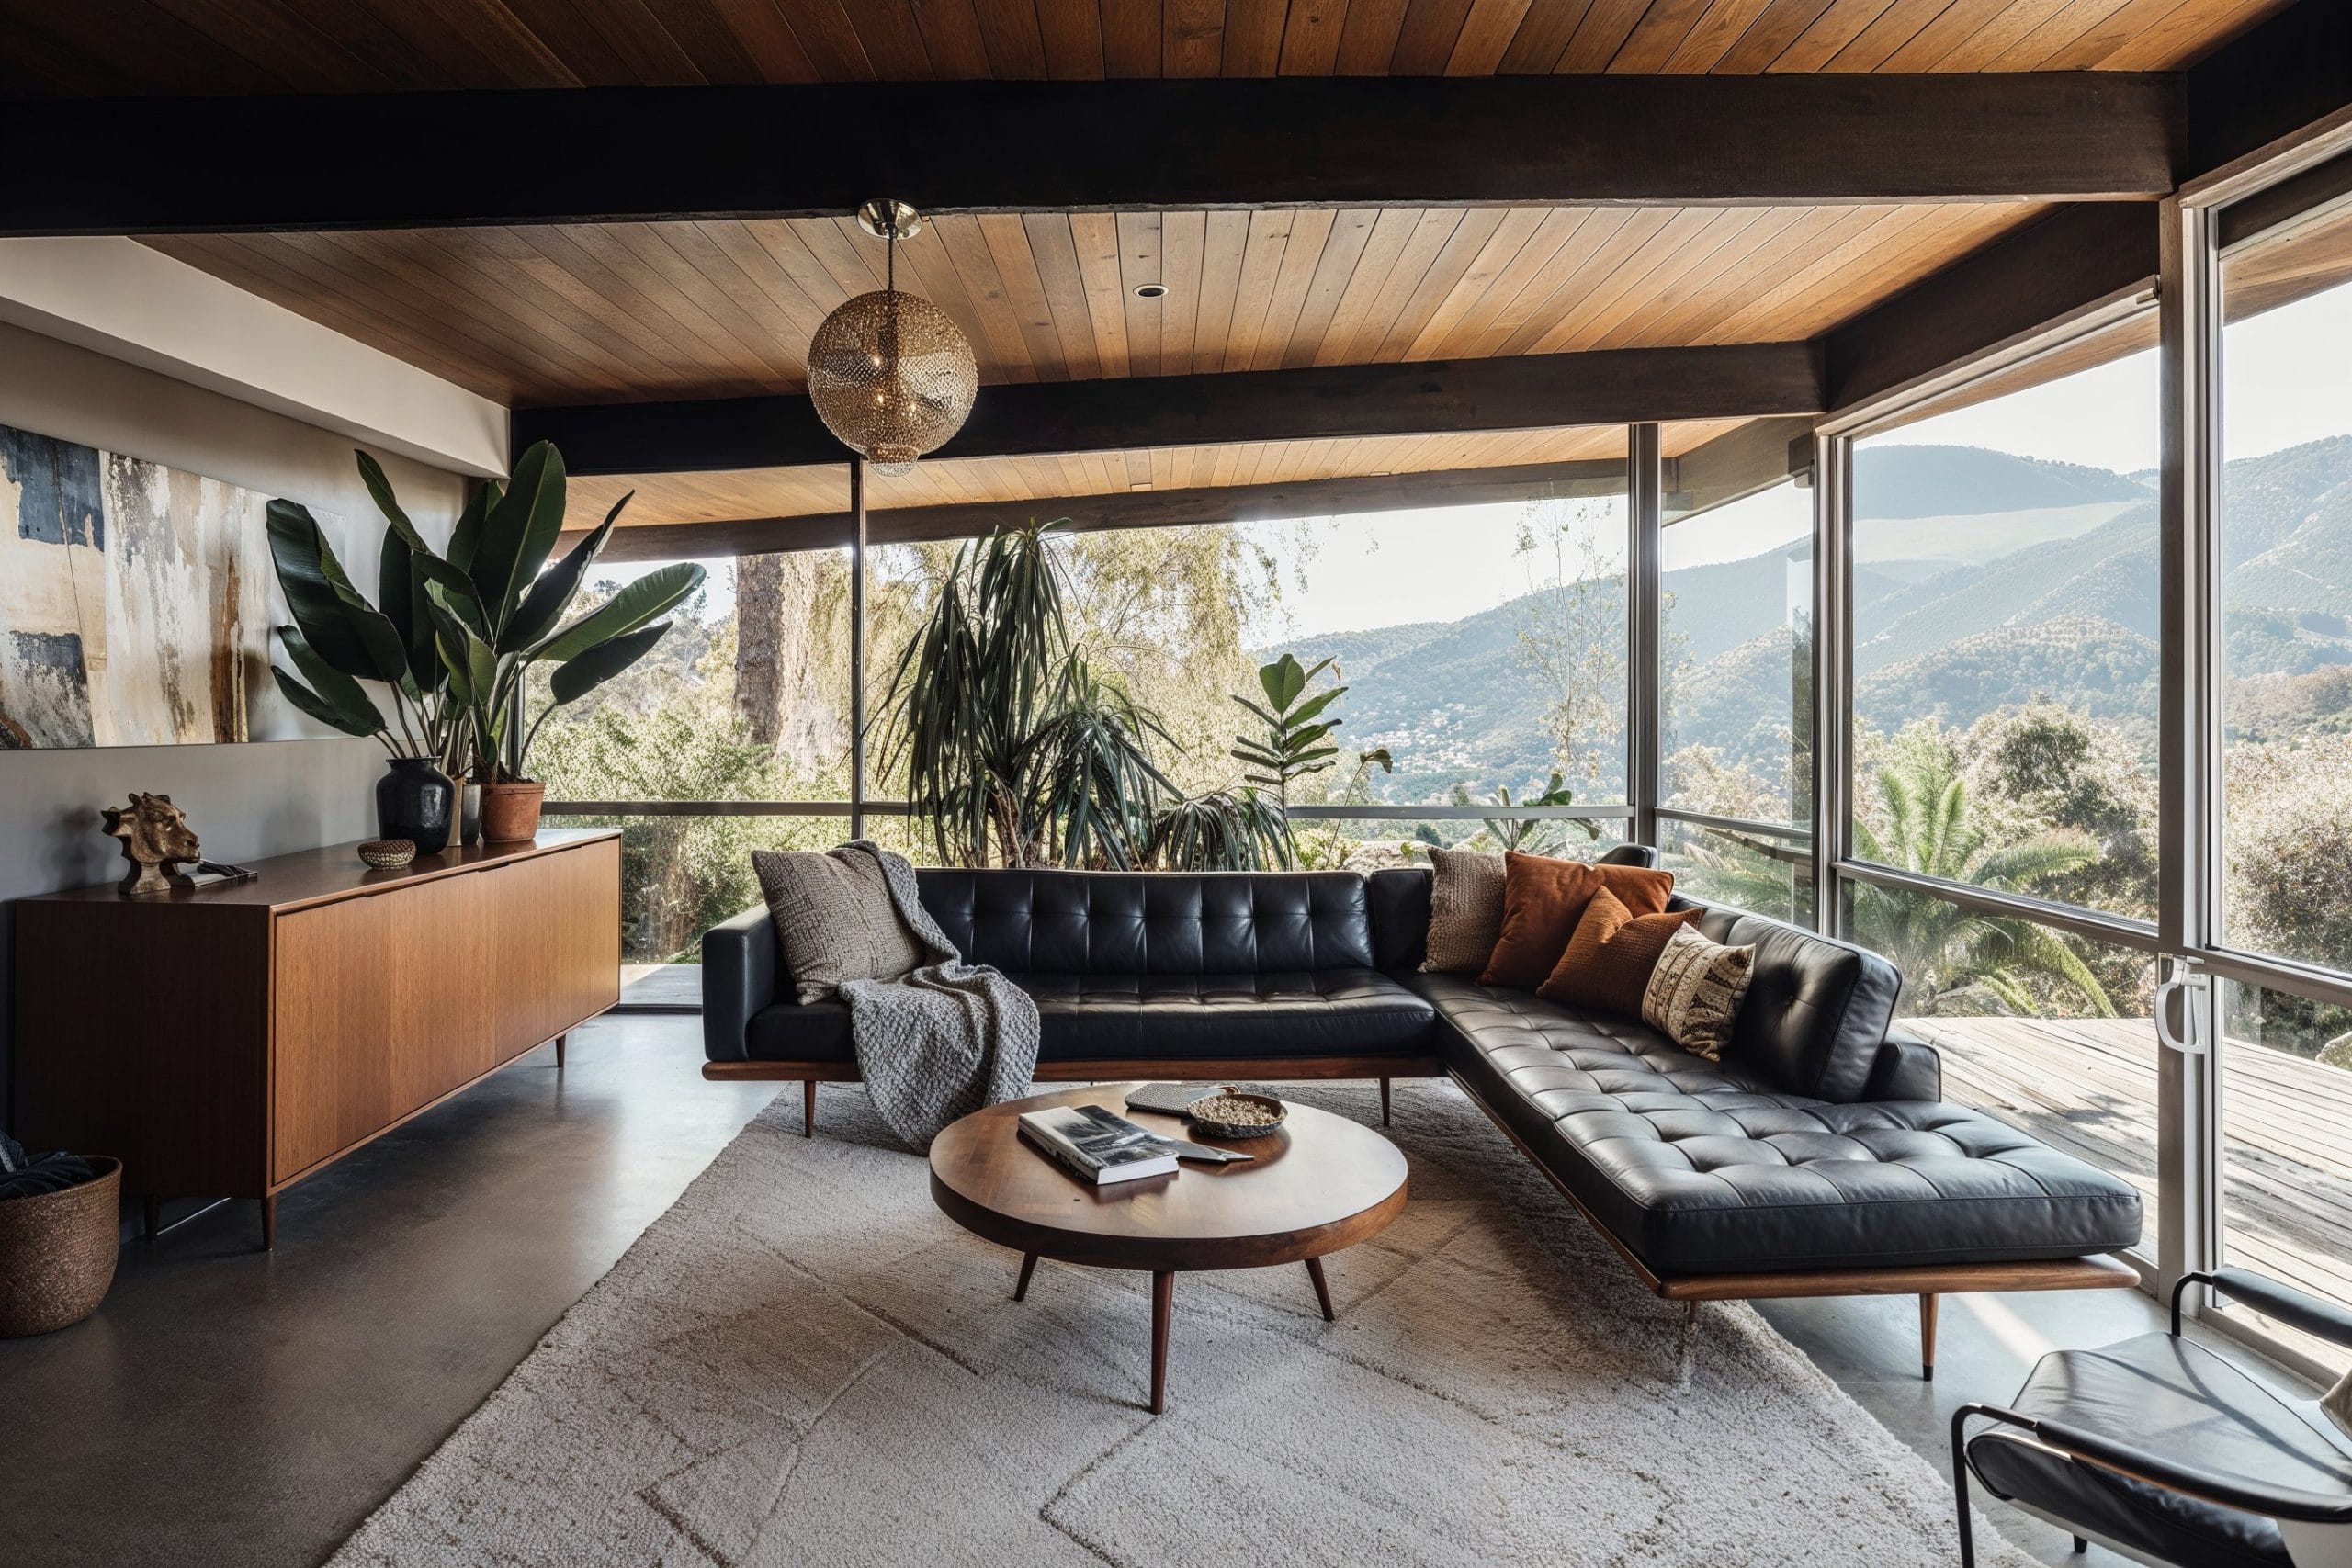 modern-interior-design-grey-living-room2